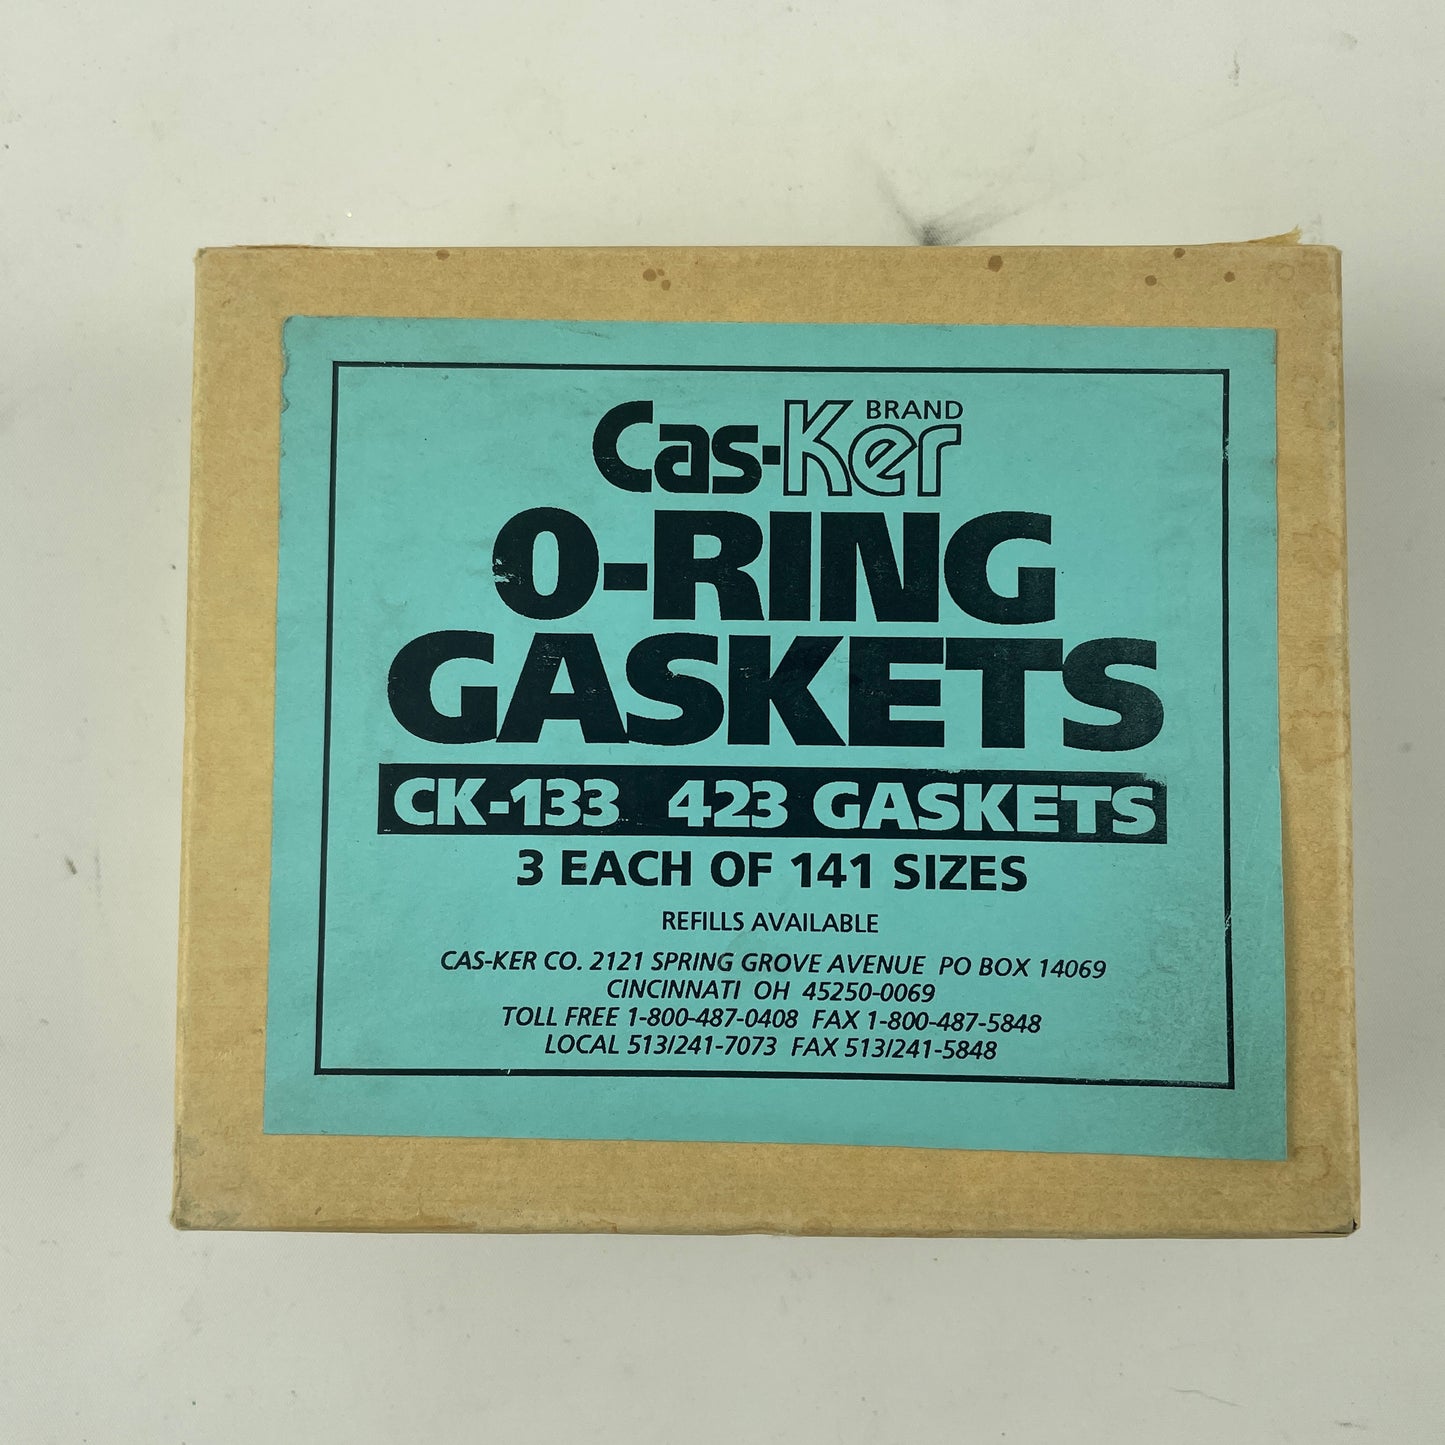 May Lot 97- Cas-Ker O-Ring Gaskets